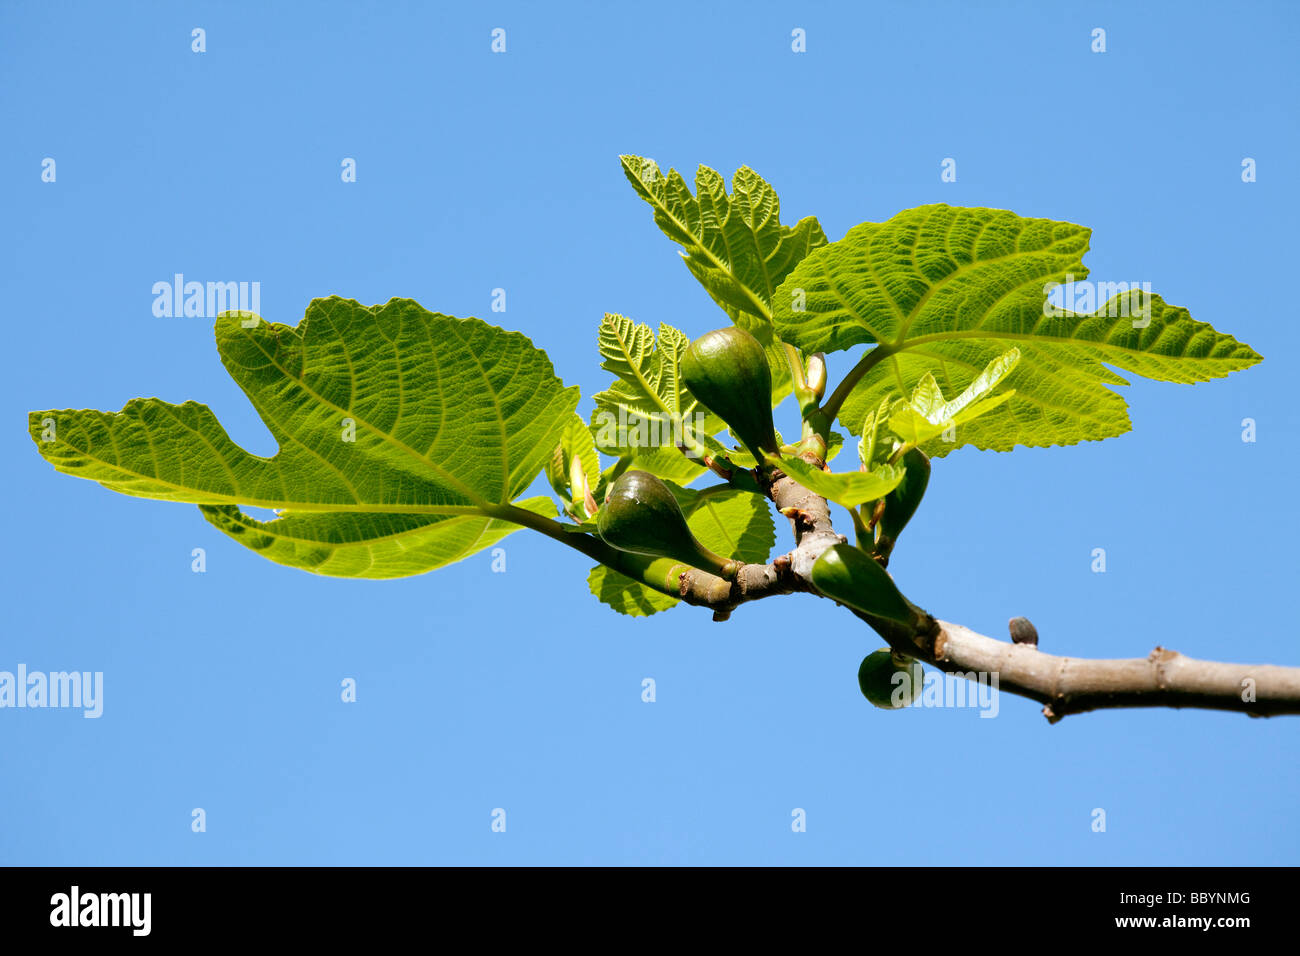 Ficus carica Higuera Fig Tree Stock Photo